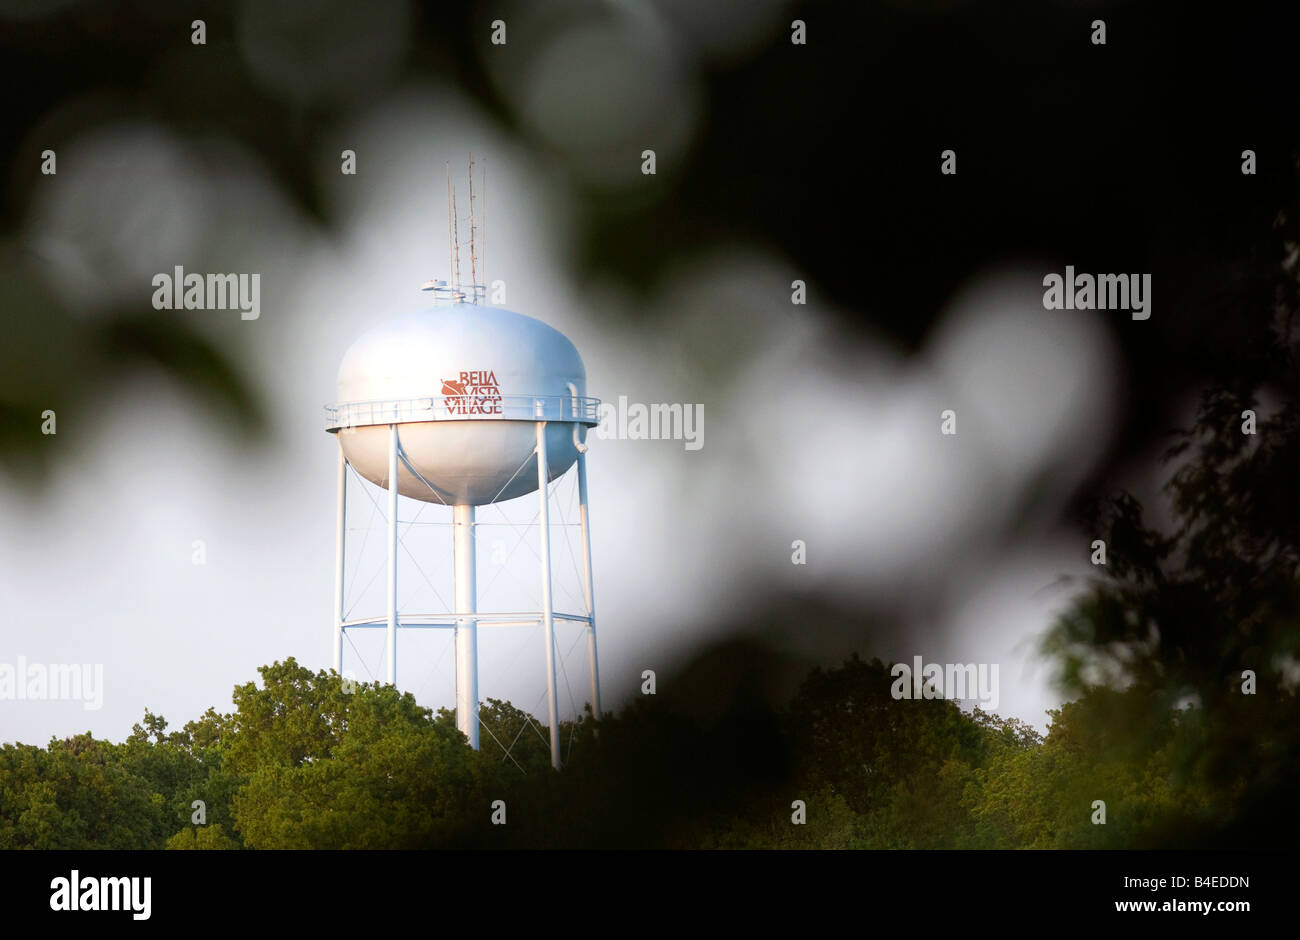 A water tower in Bella Vista, Arkansas, U.S.A. Stock Photo